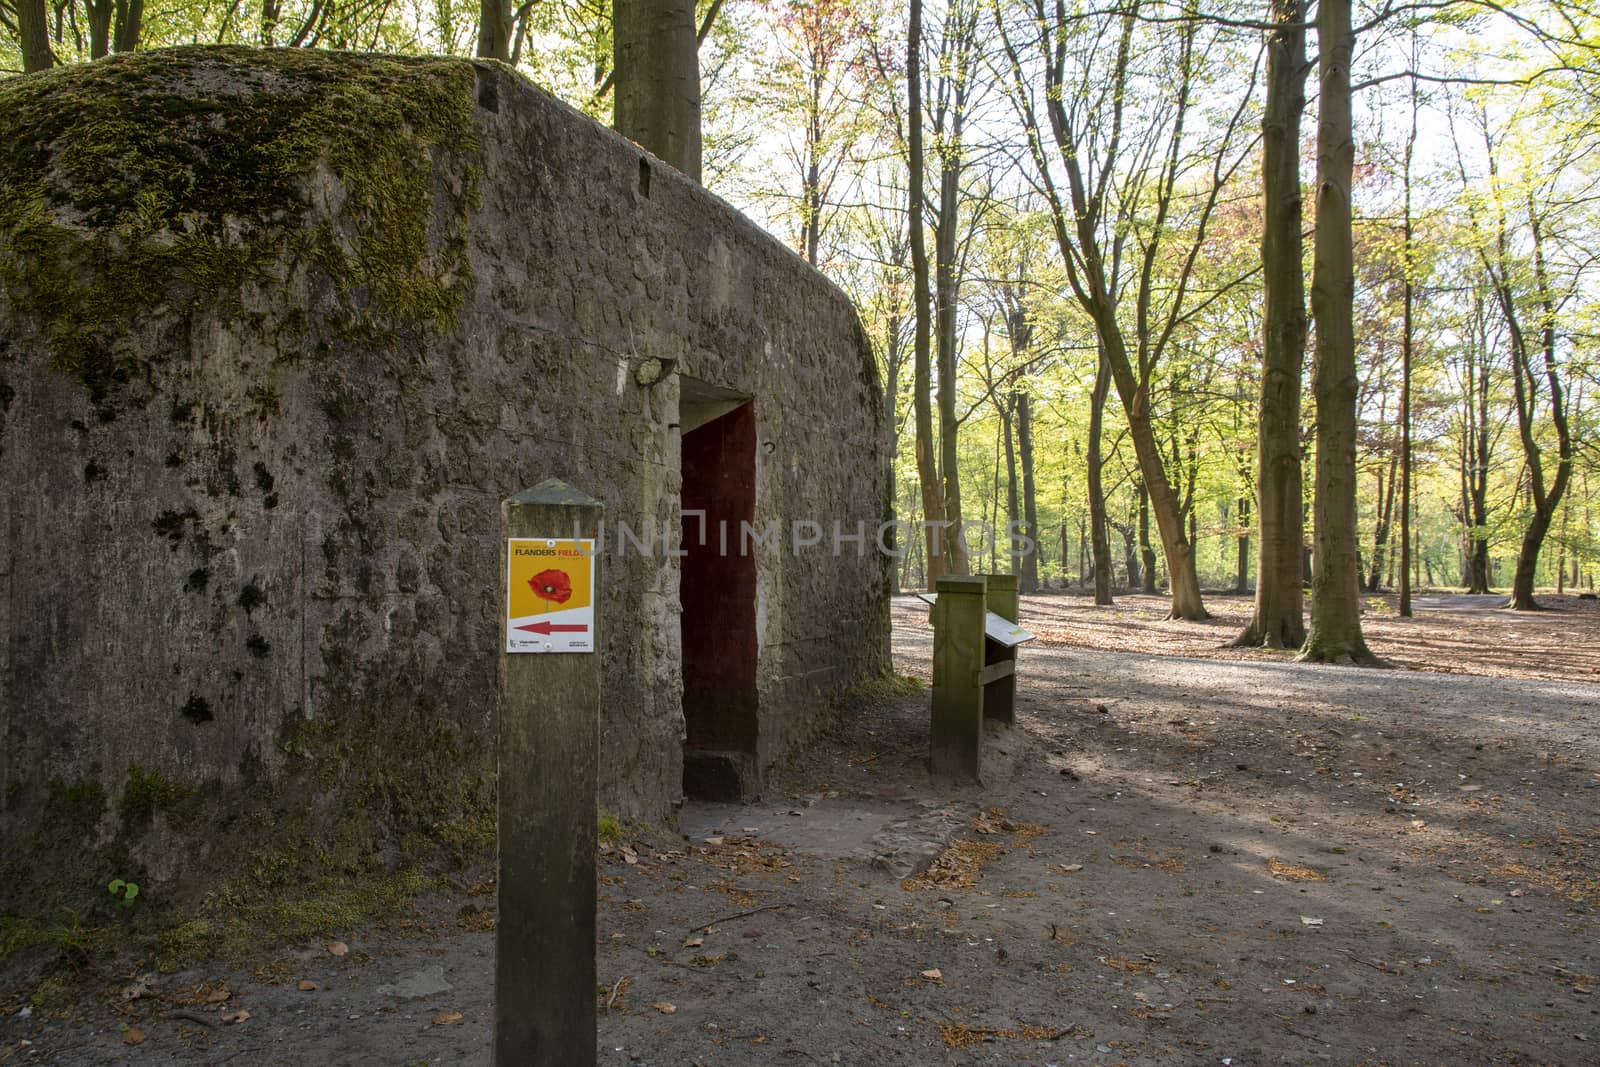 Kapellen, Belgium, April 2020: WW1 bunker located in Mastenbos on the historical Flanders Fields site